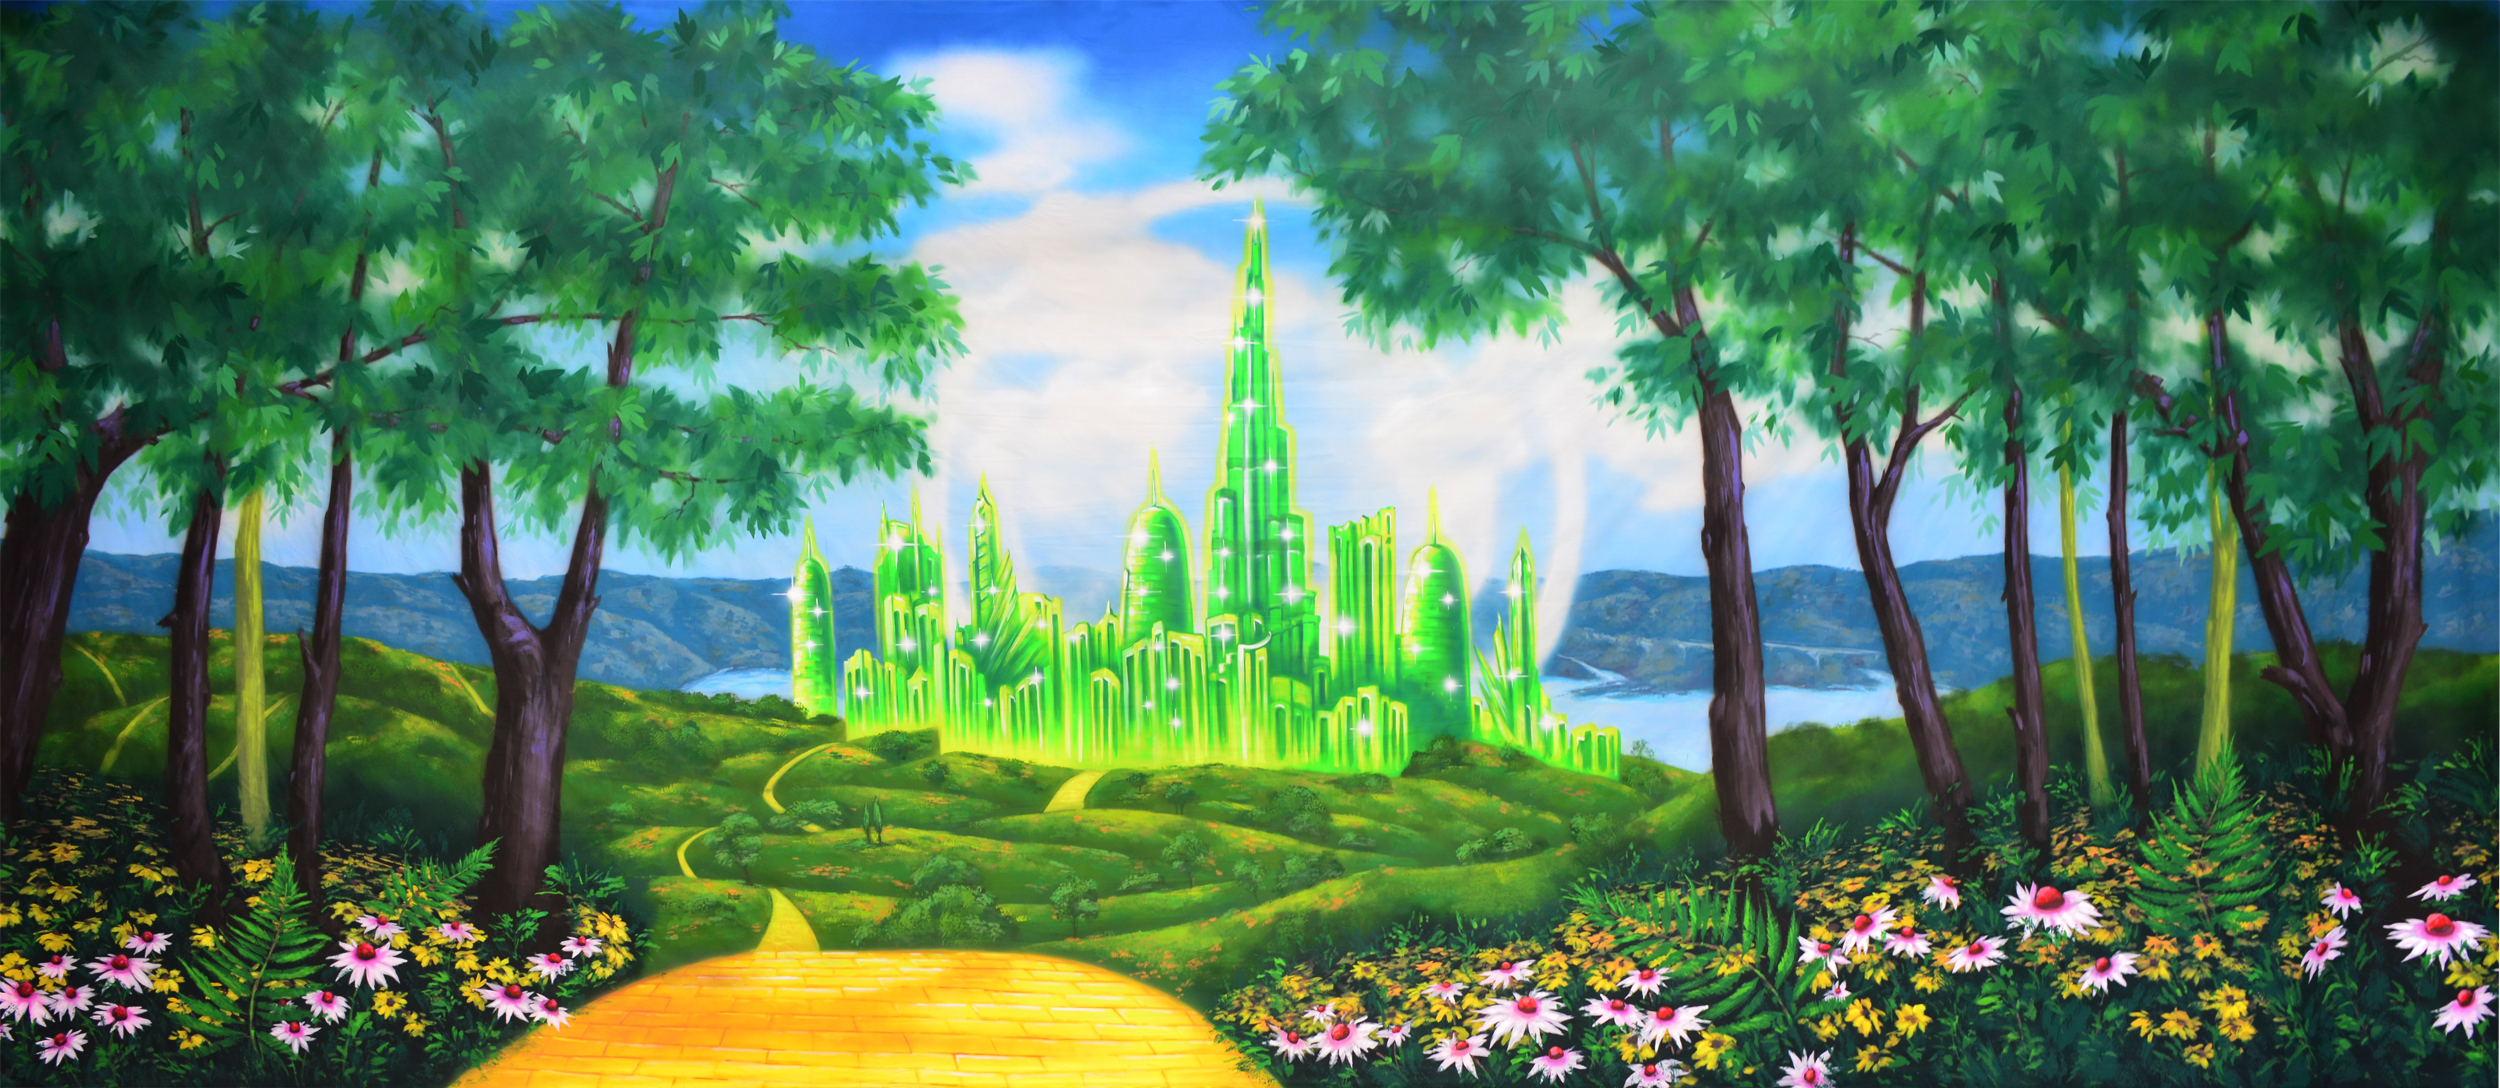 Oz Emerald City backdrop ES8134